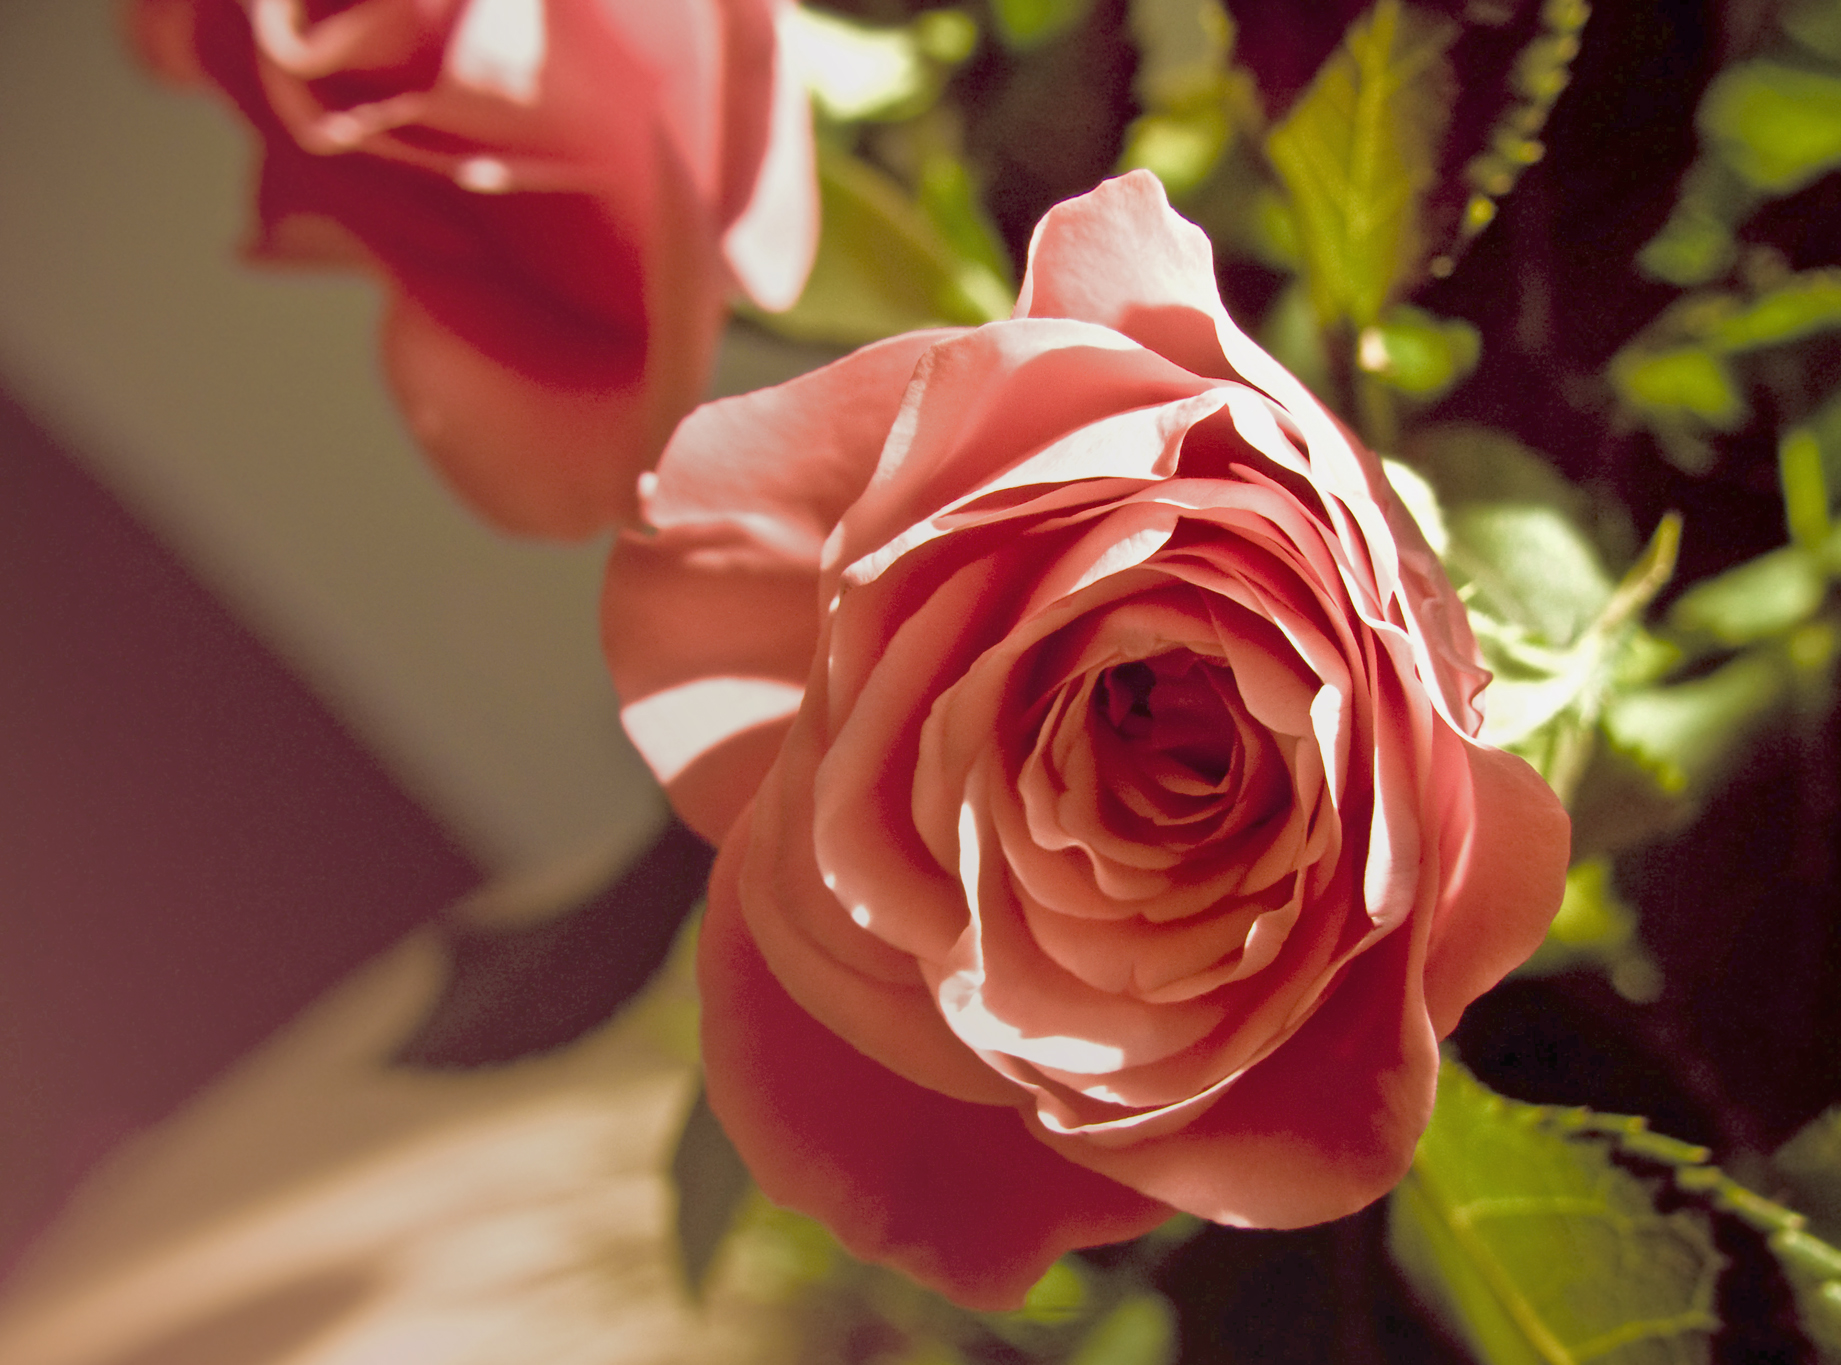 Pink rose flower photo